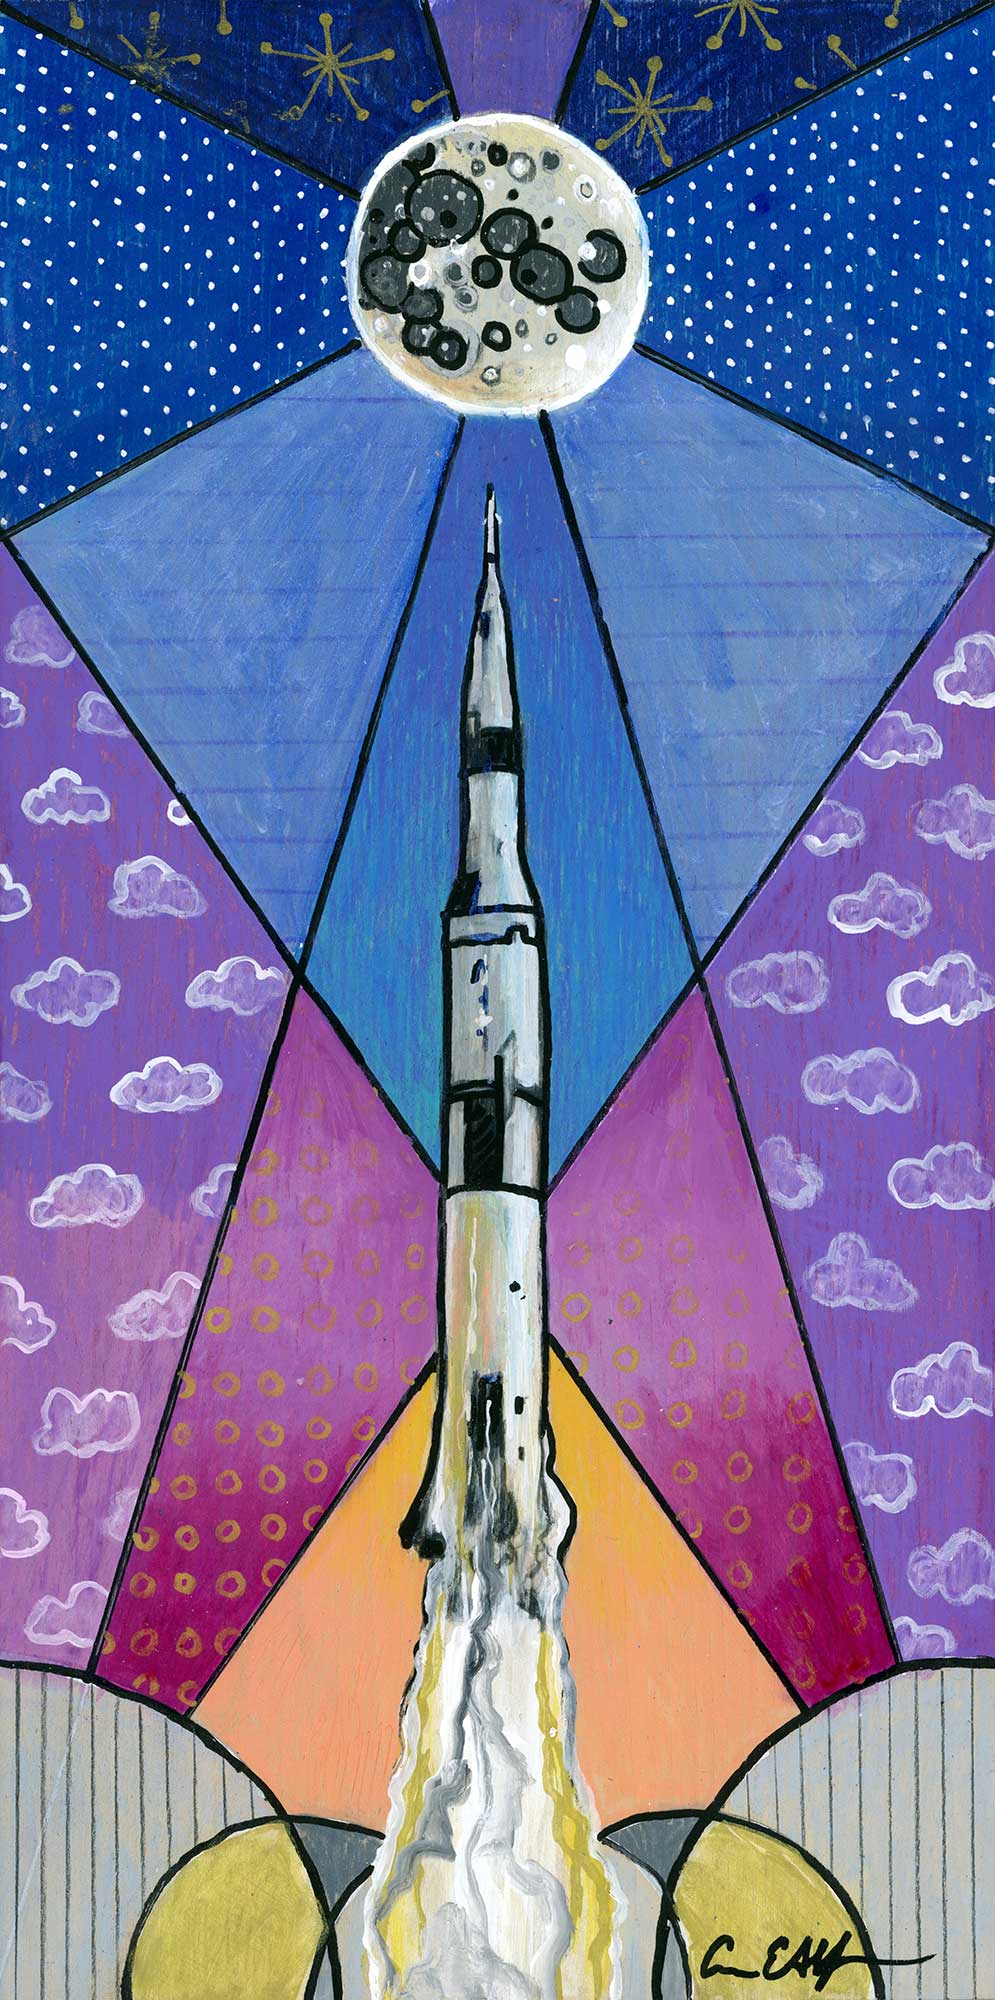 SOLD - "Apollo 11 Launch", 6" x 12", mixed media